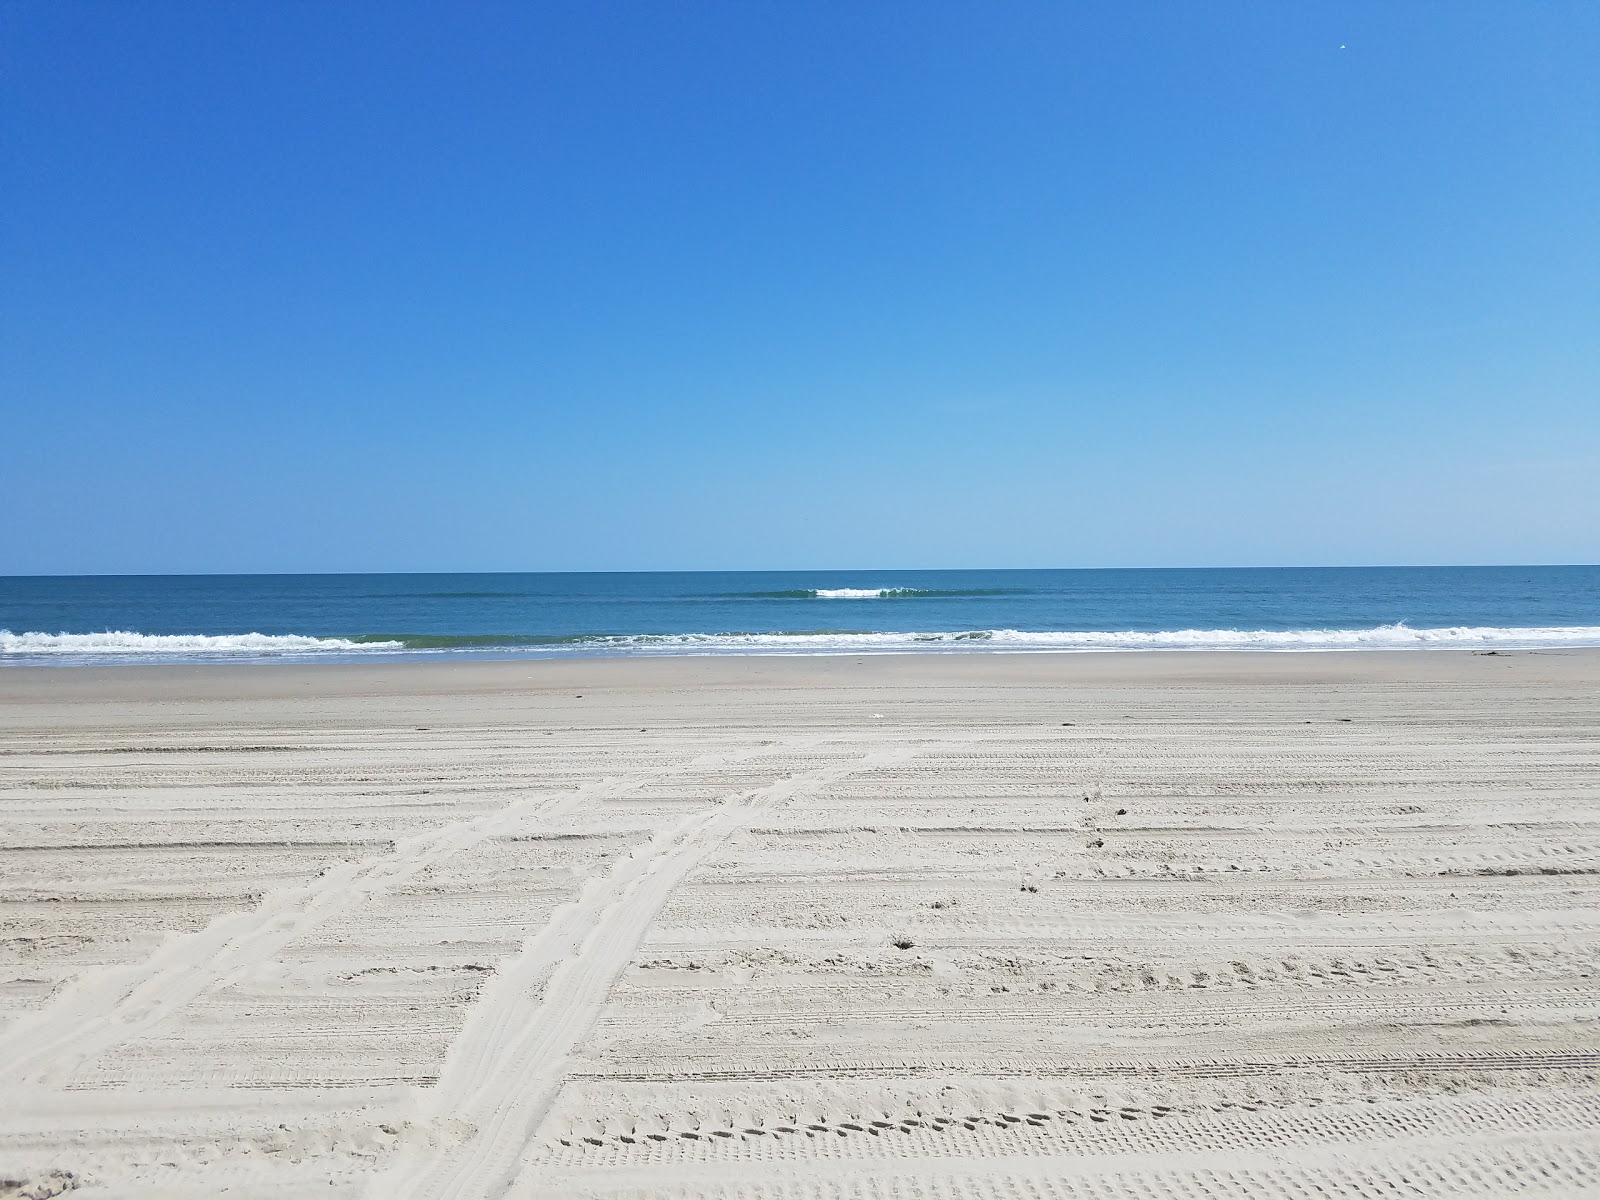 Foto av Corolla beach med hög nivå av renlighet